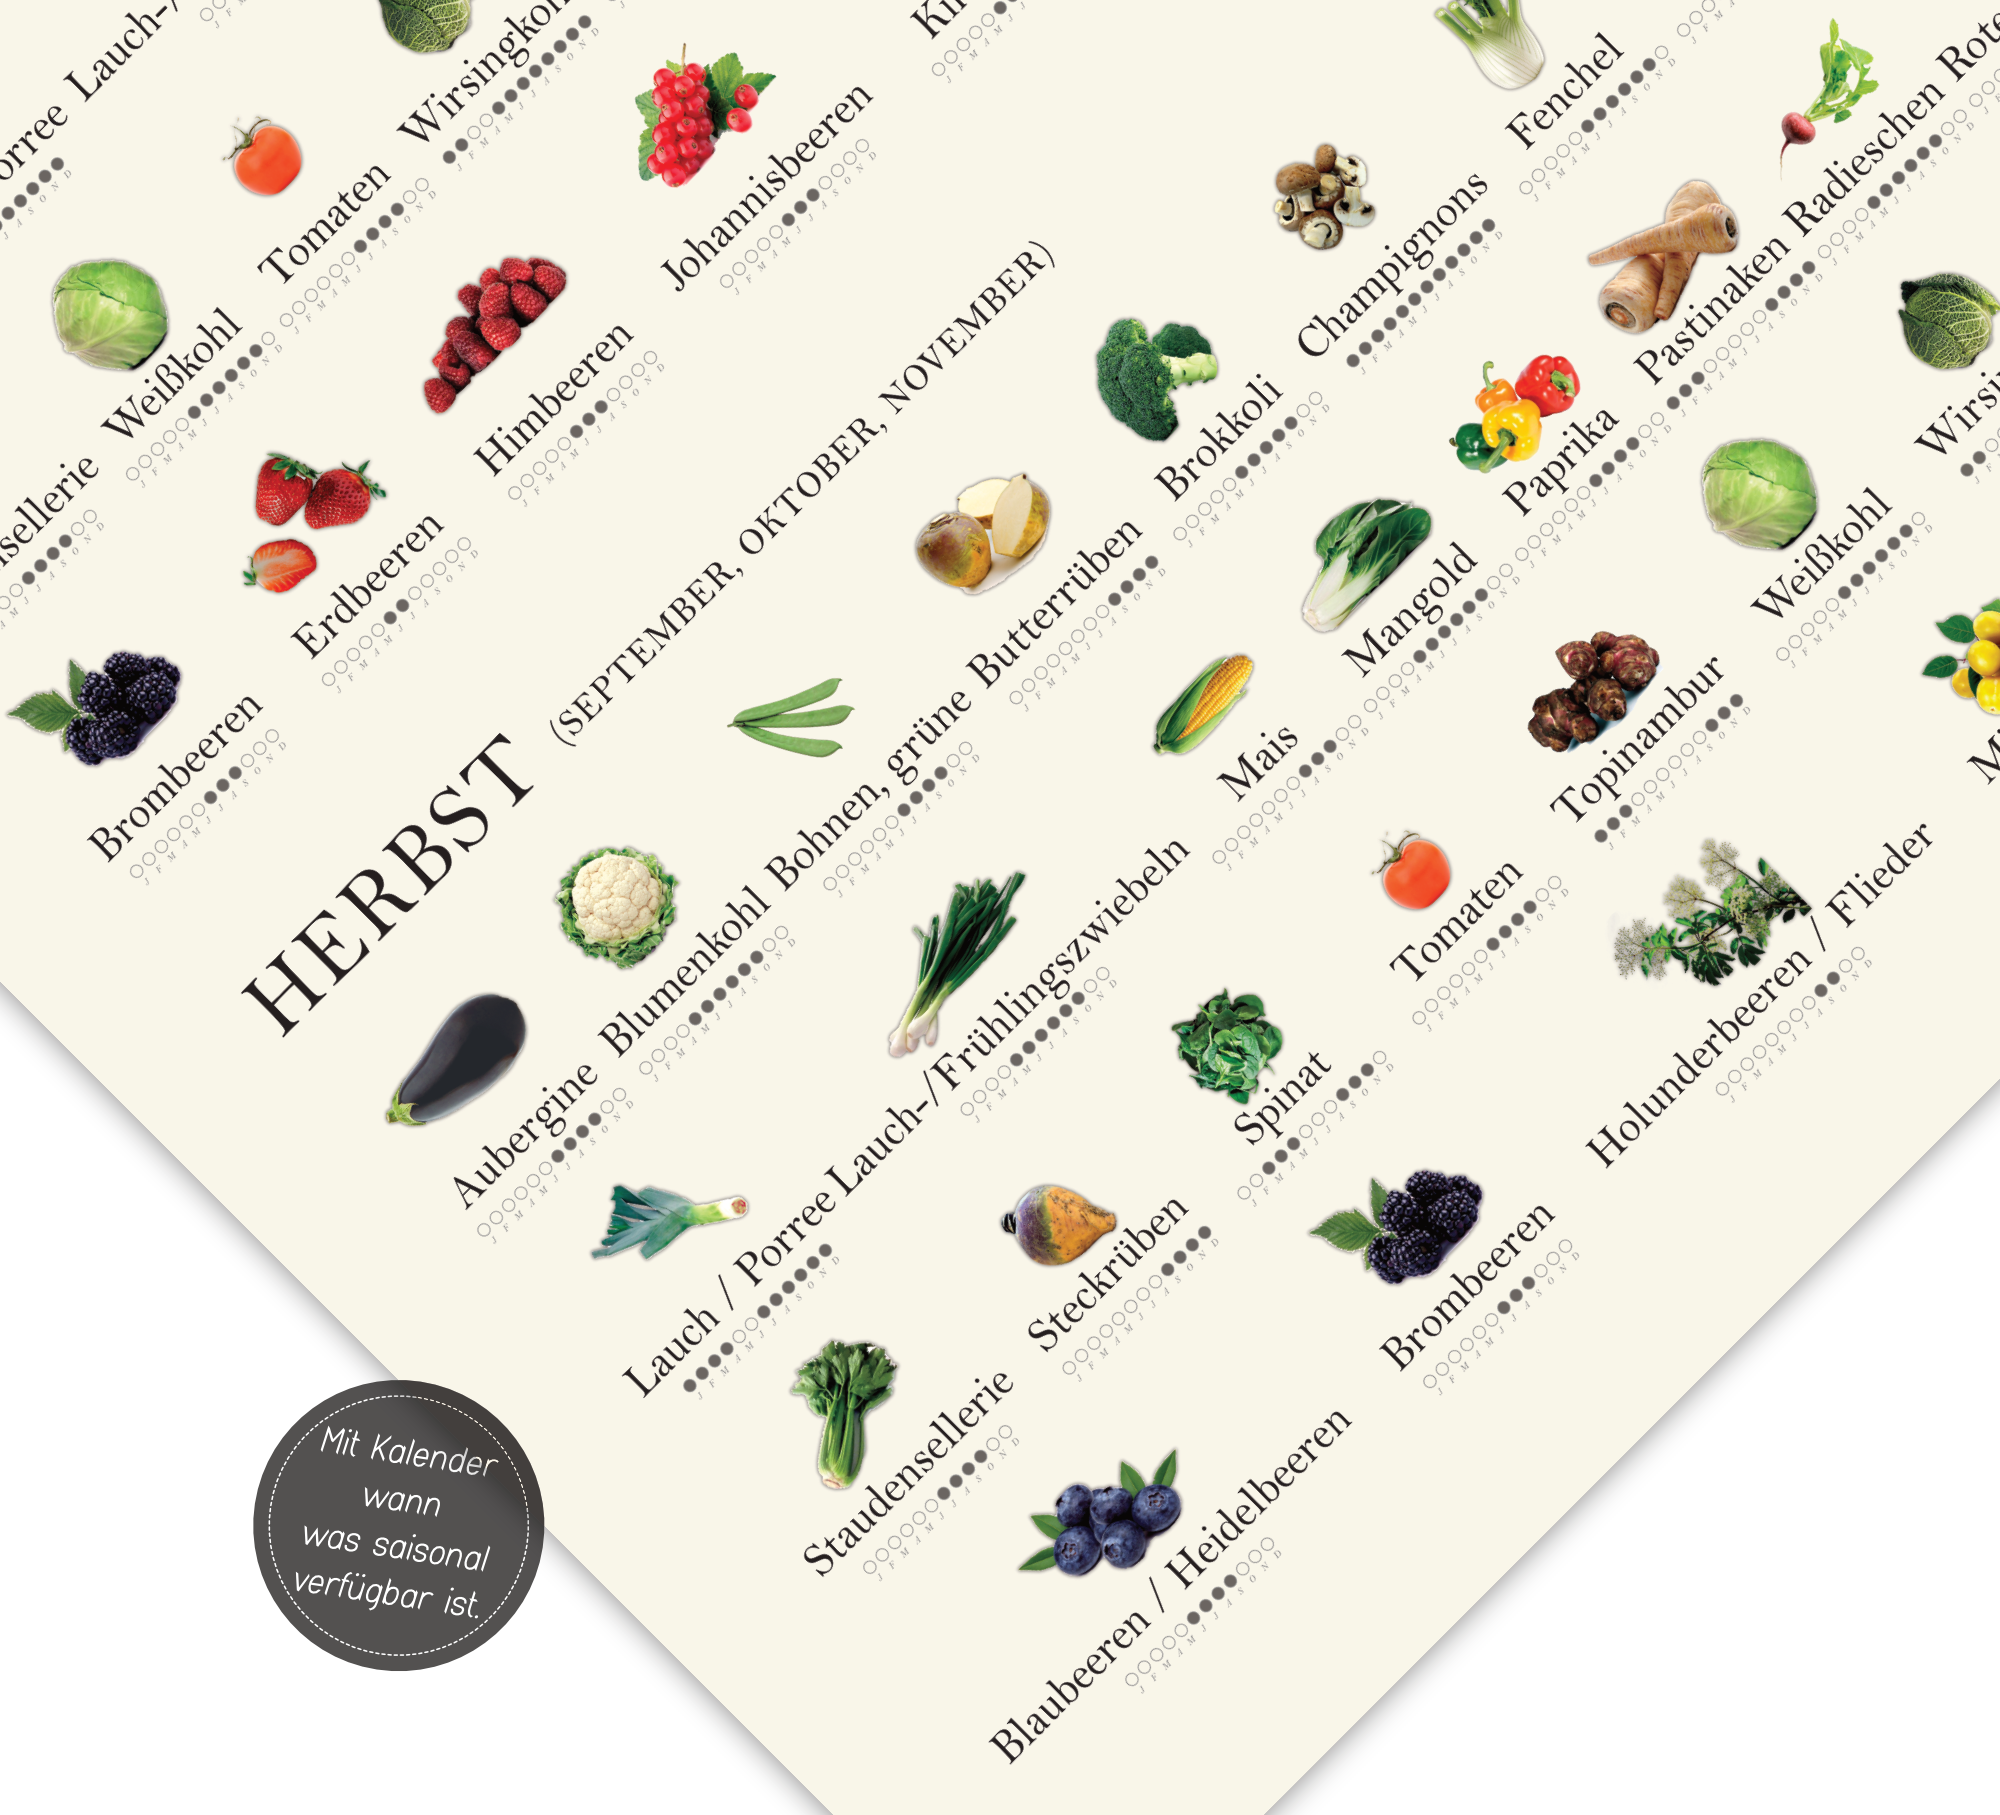 und – MrTKBooker Gemüse Obst Saisonkalender Poster